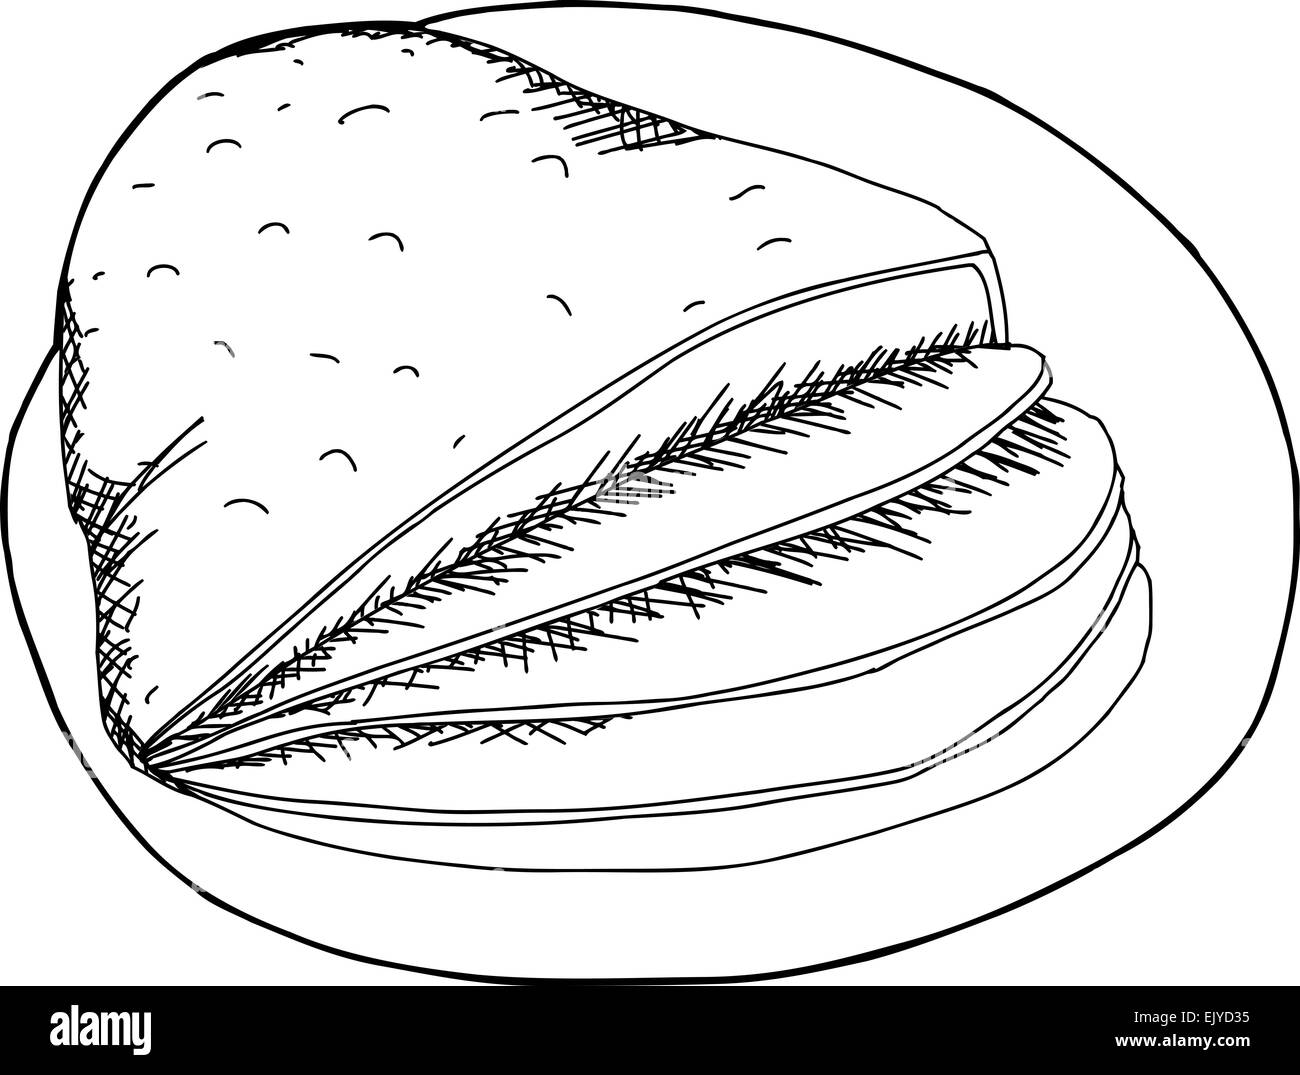 Outline cartoon of sliced ham on plate Stock Photo